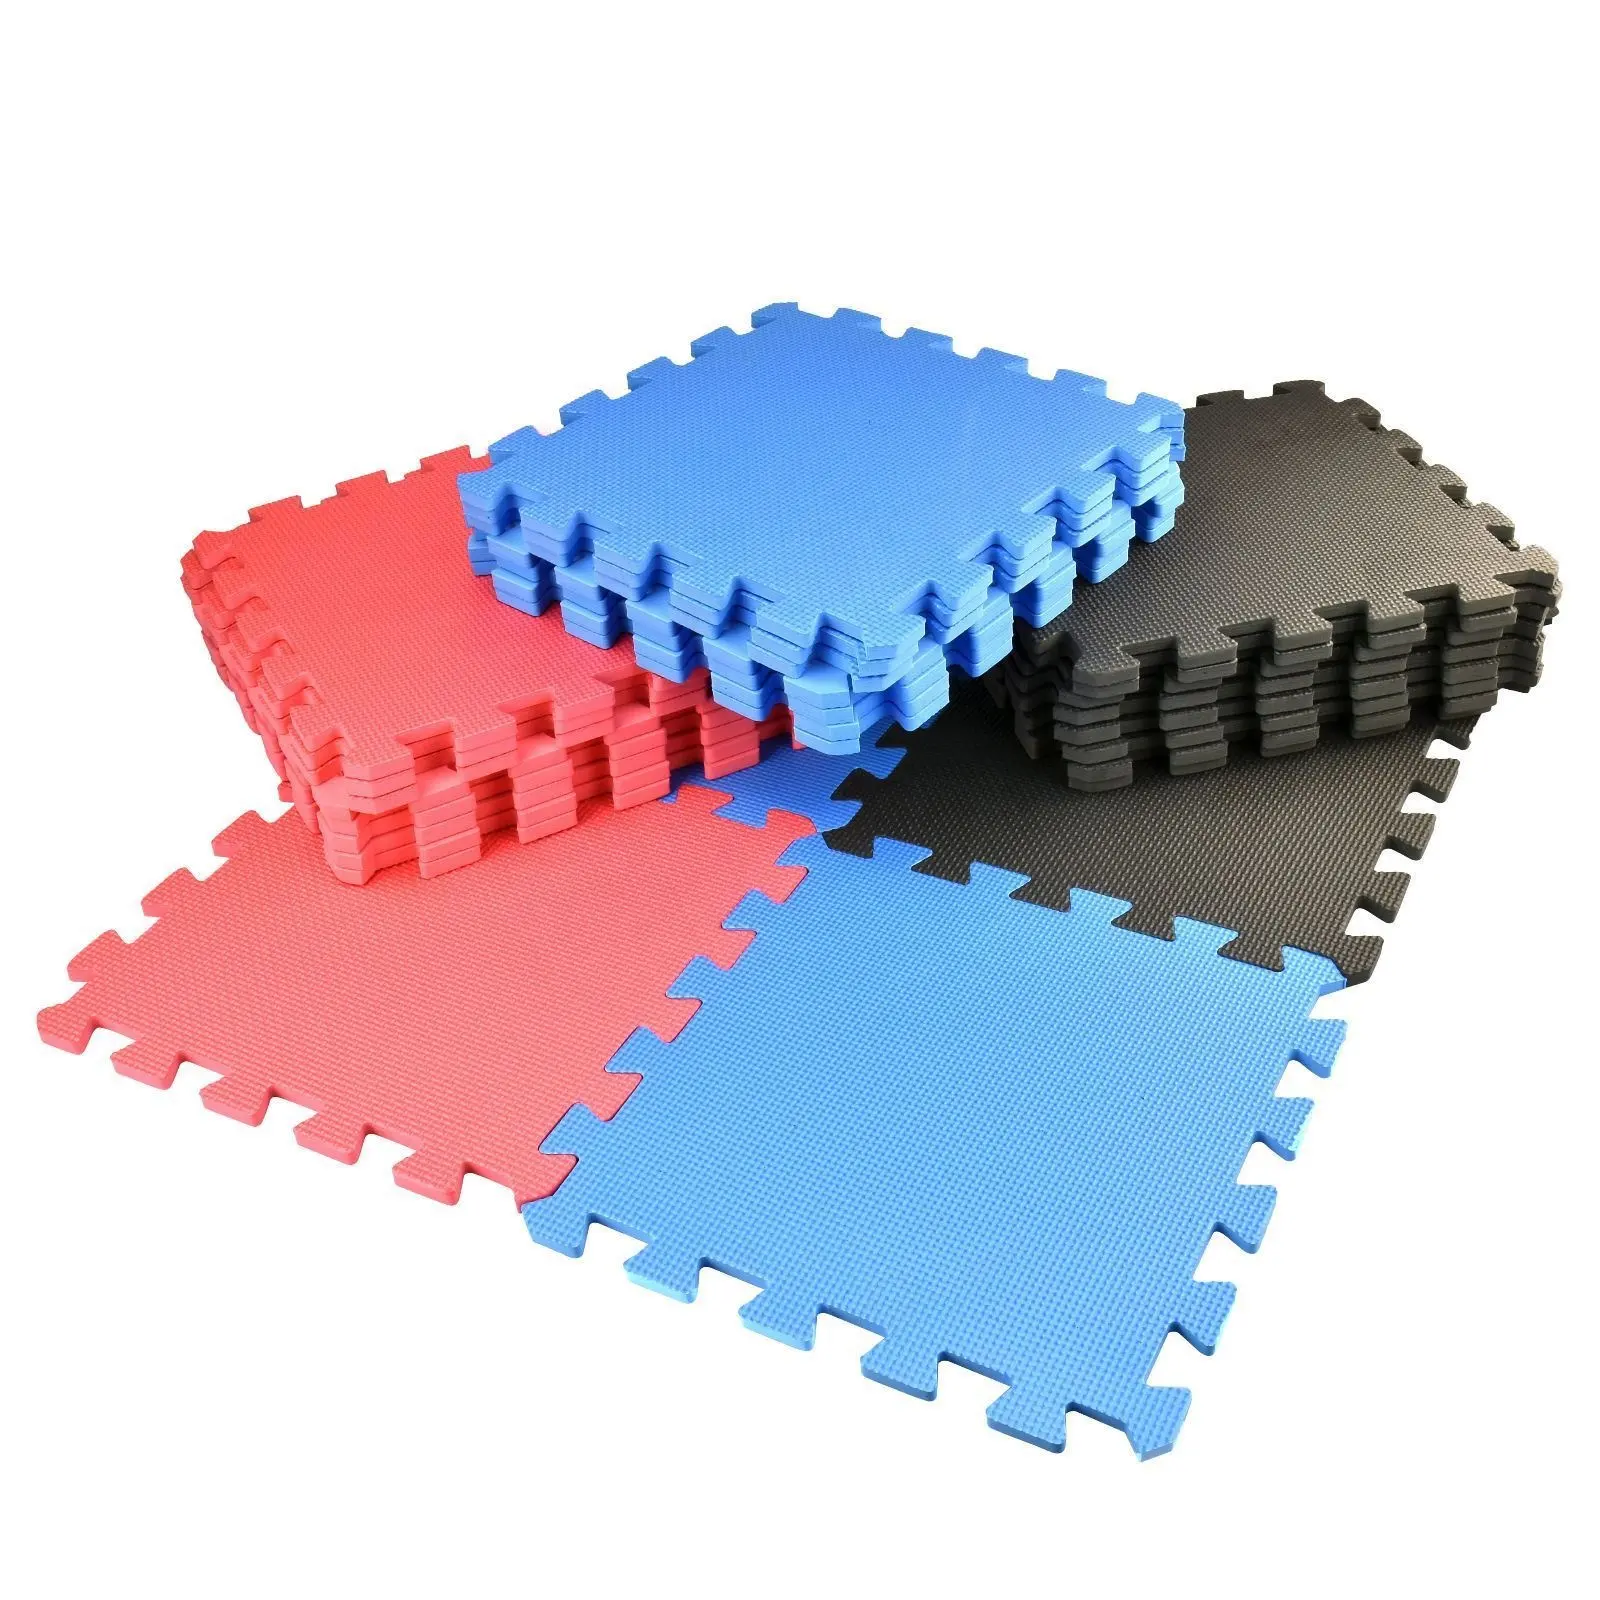 30*30cm EVA Foam mat Baby EVA Puzzle Foam Exercise Mats Protective Flooring Tiles for Home Gym Equipment